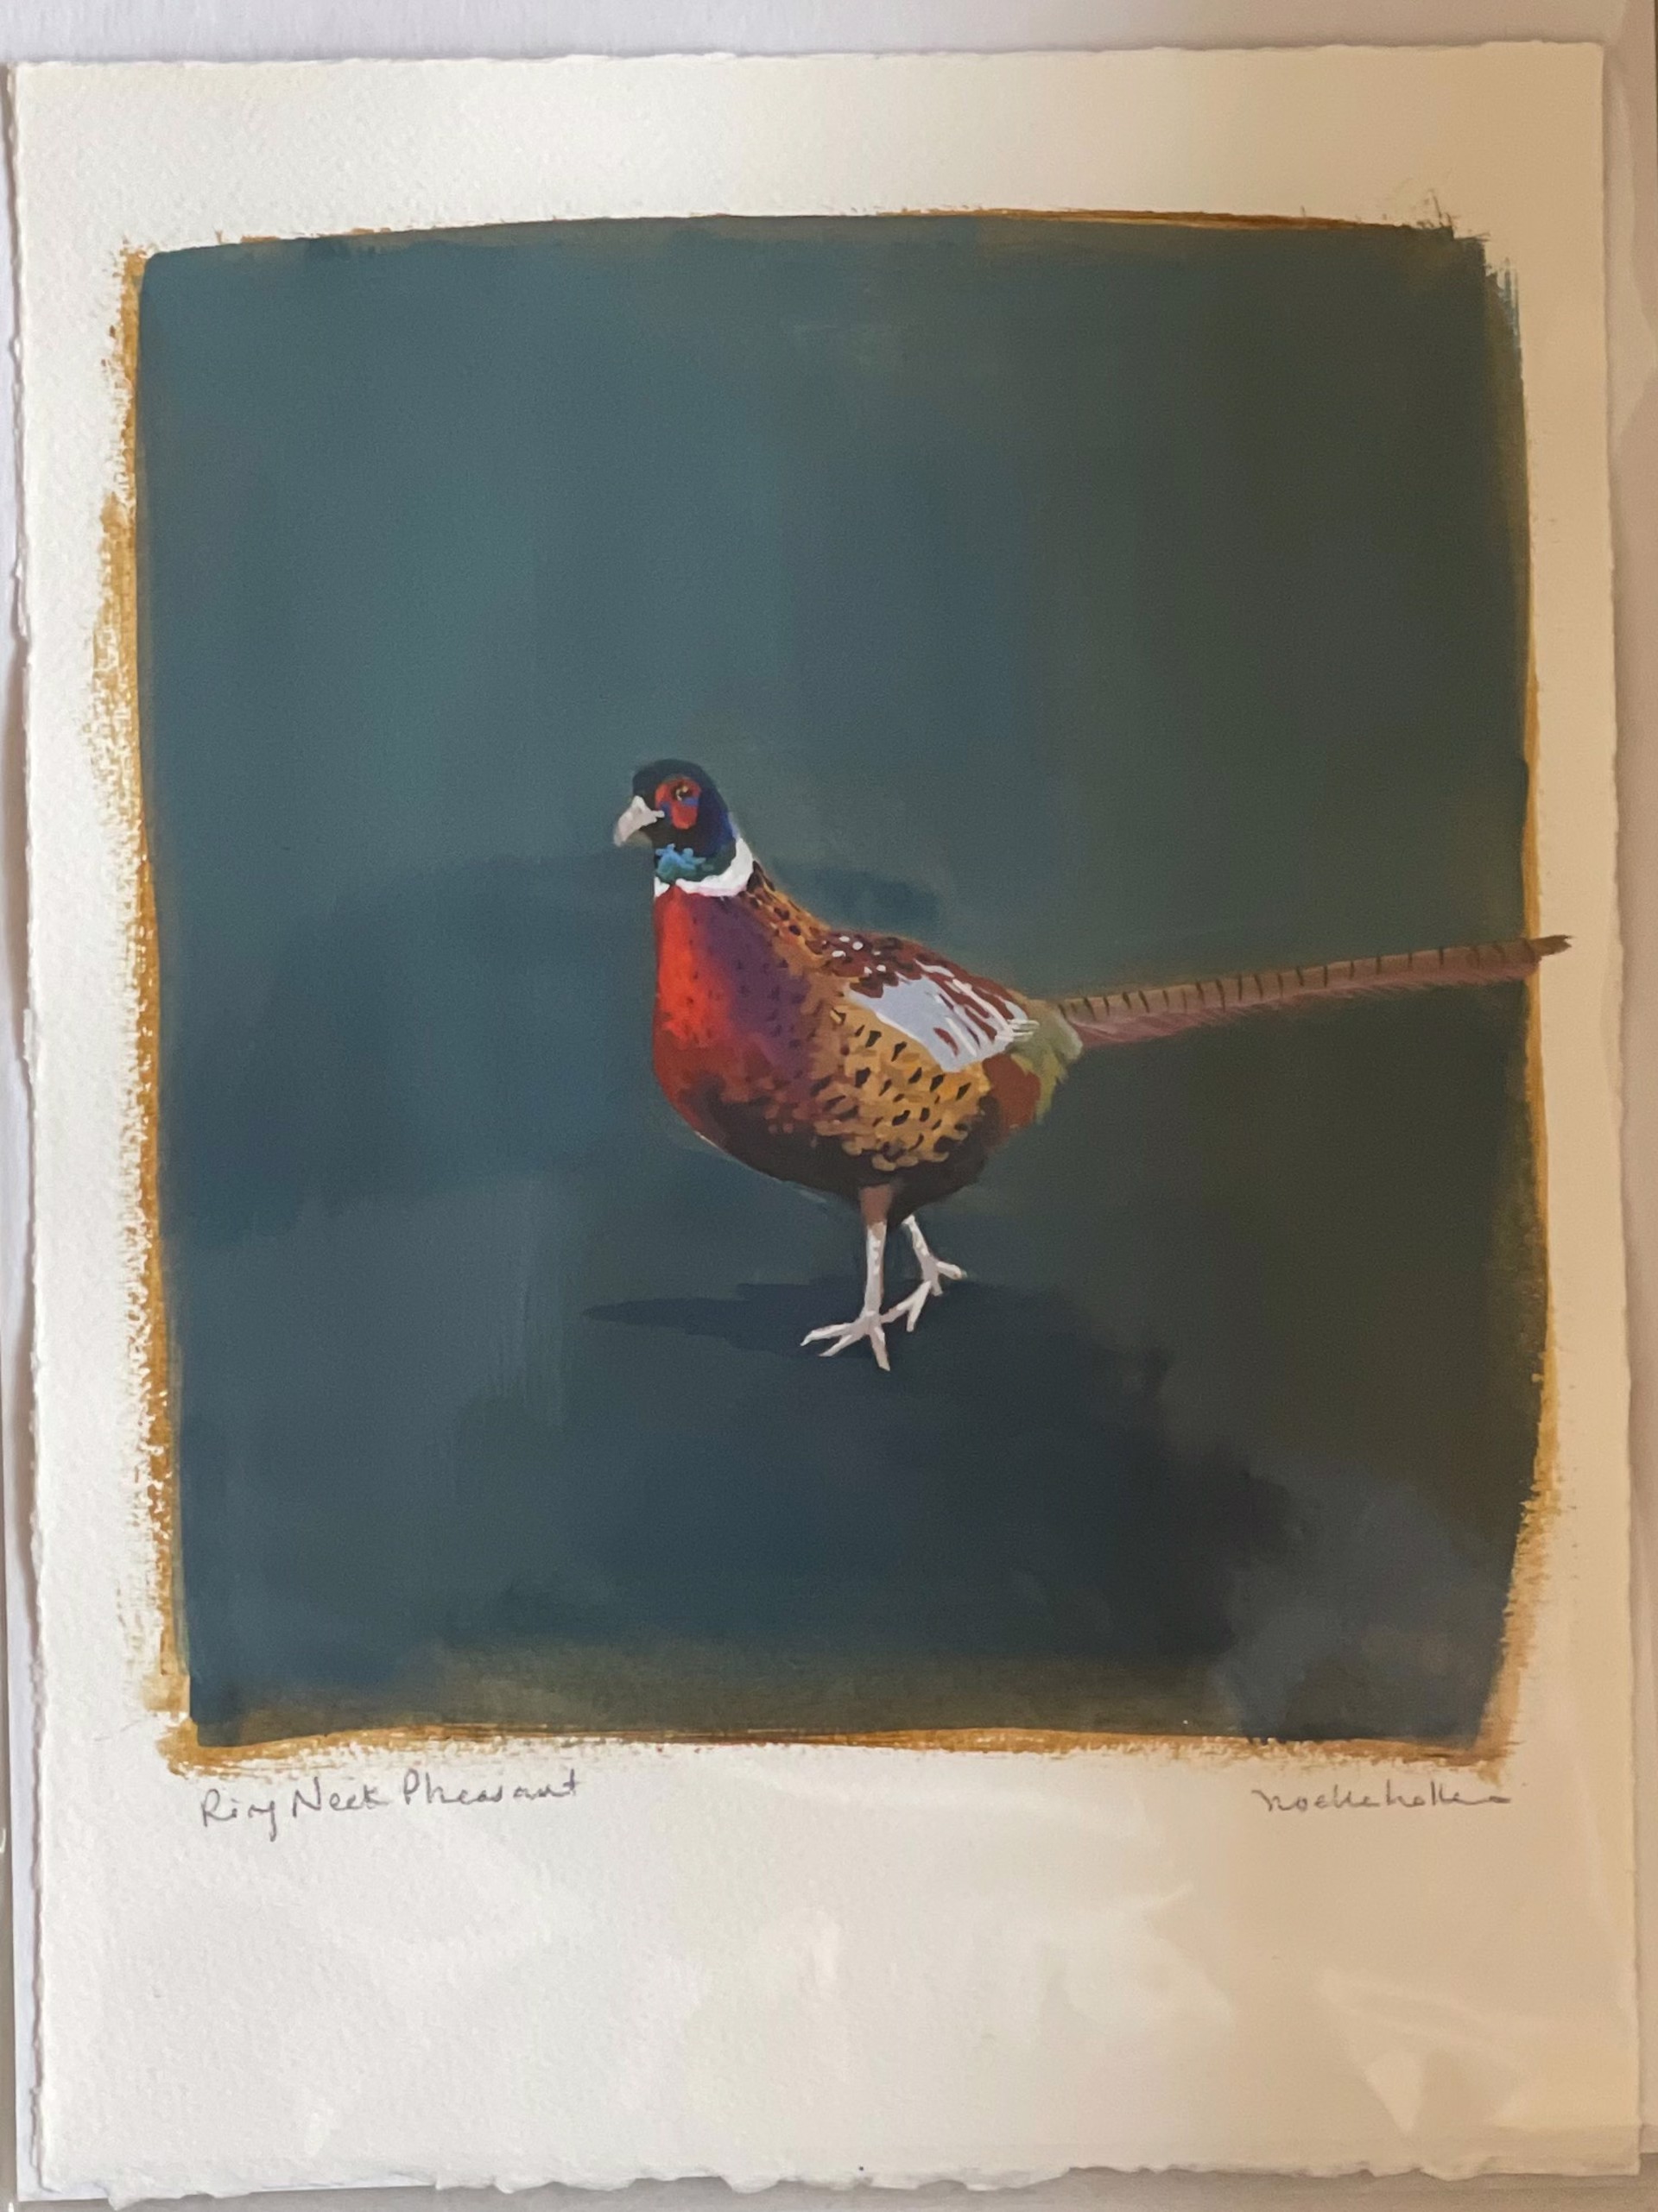 Ring Neck Pheasant by Noelle Holler